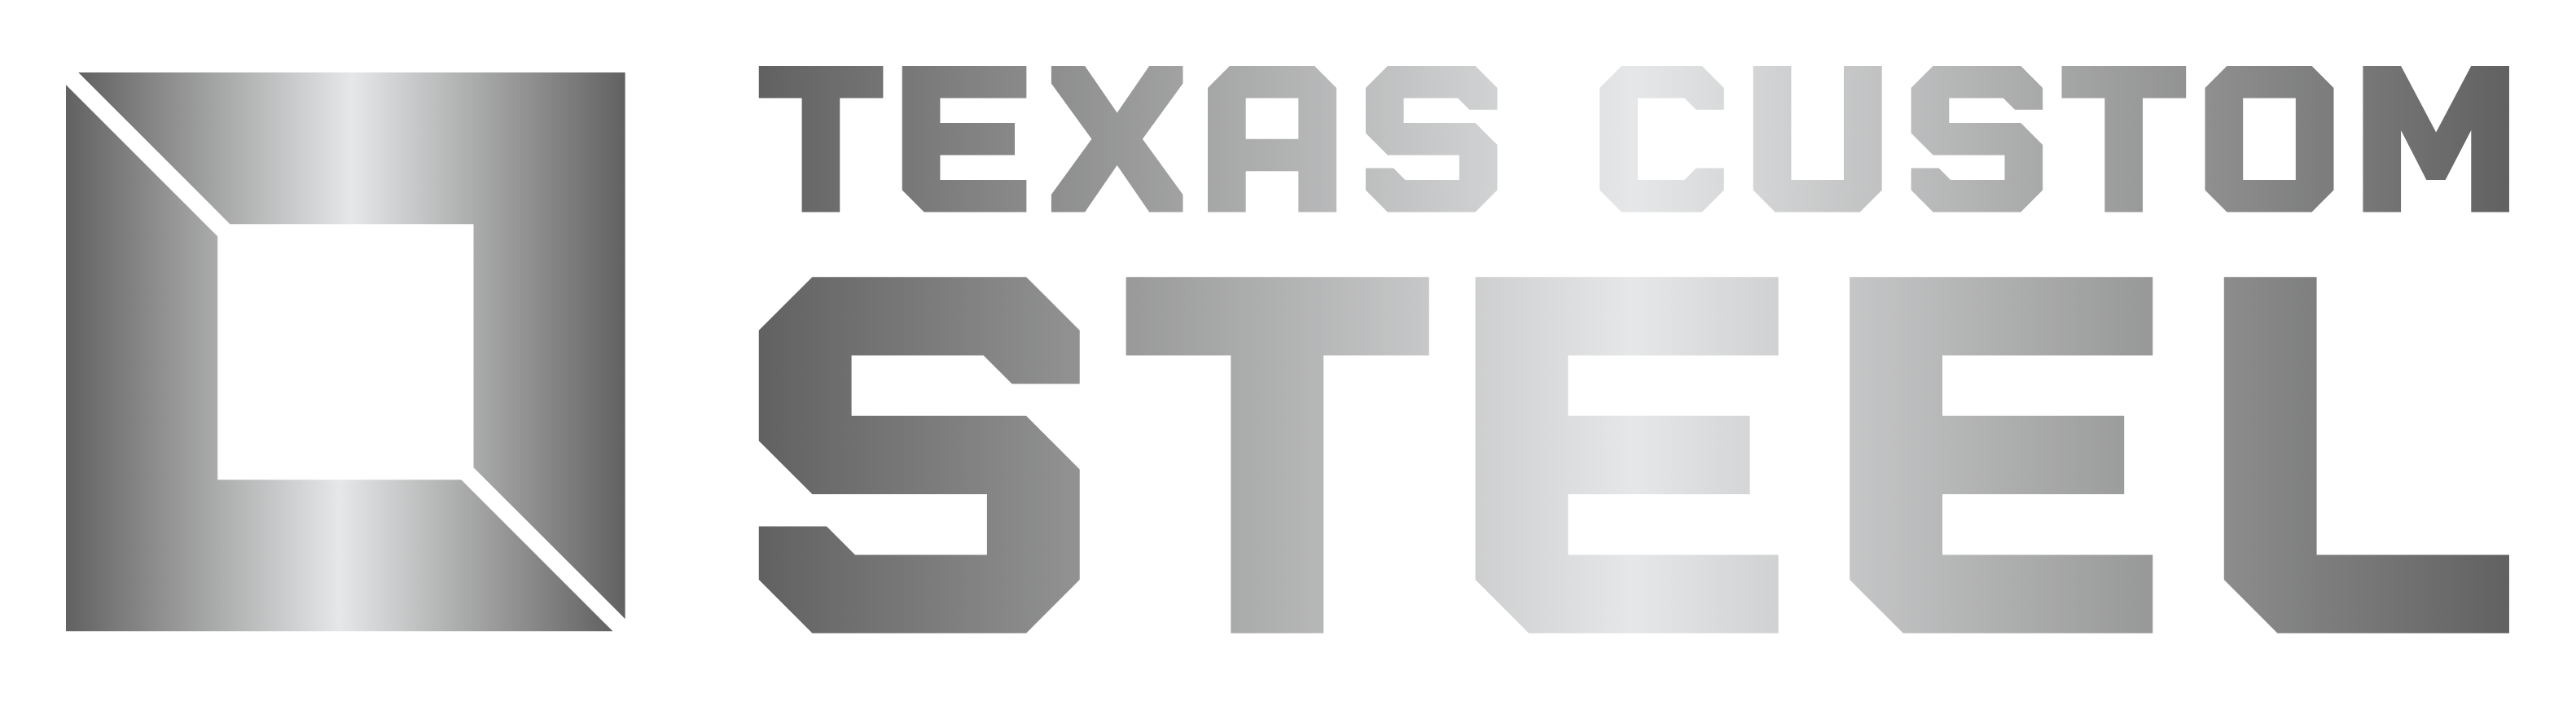 Texas Custom Steel